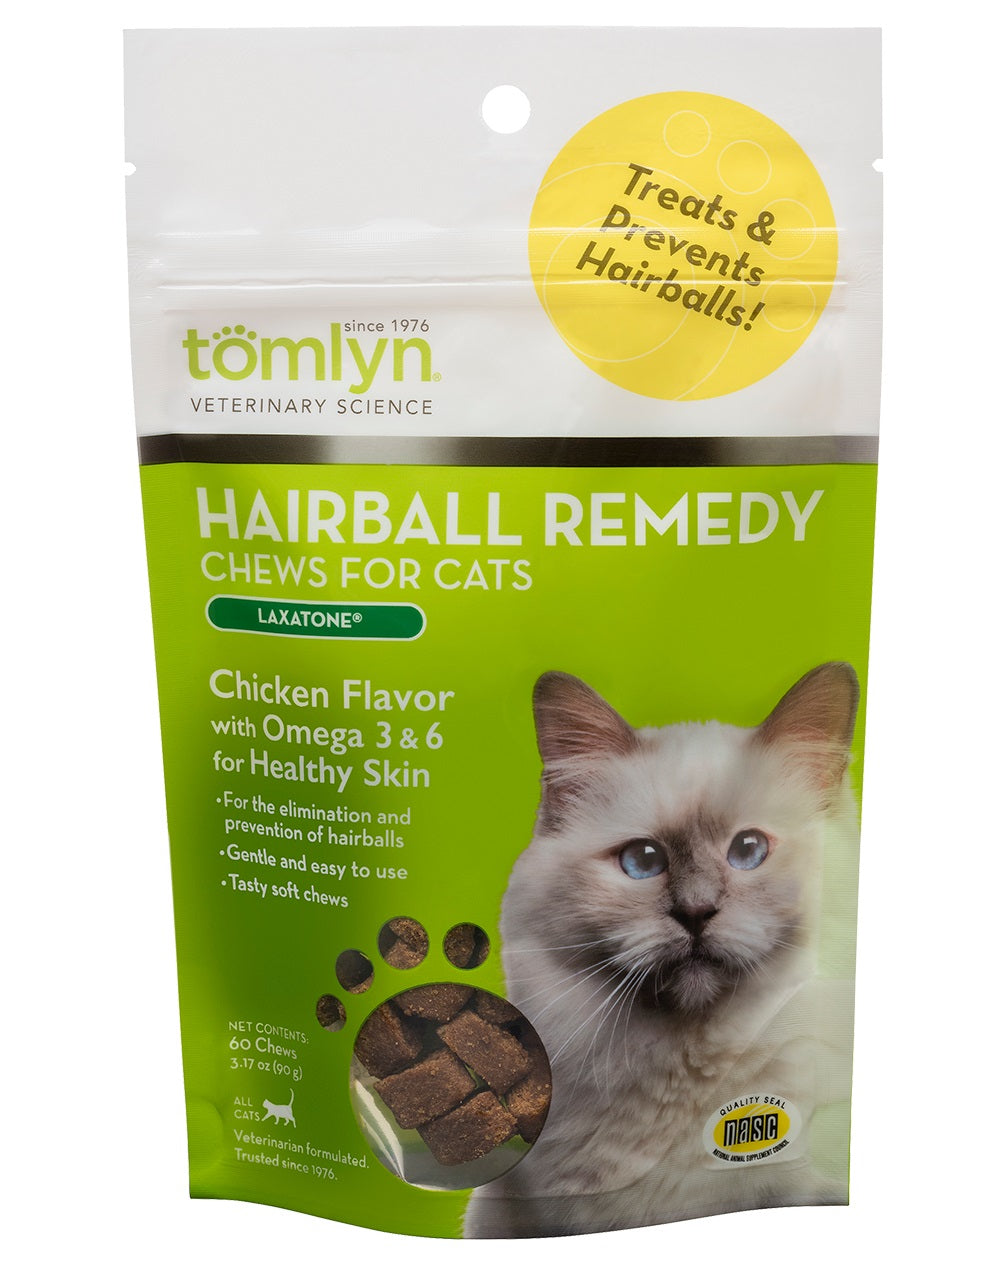 Tomlyn Hairball Remedy Chews for Cats - PetMountain.com